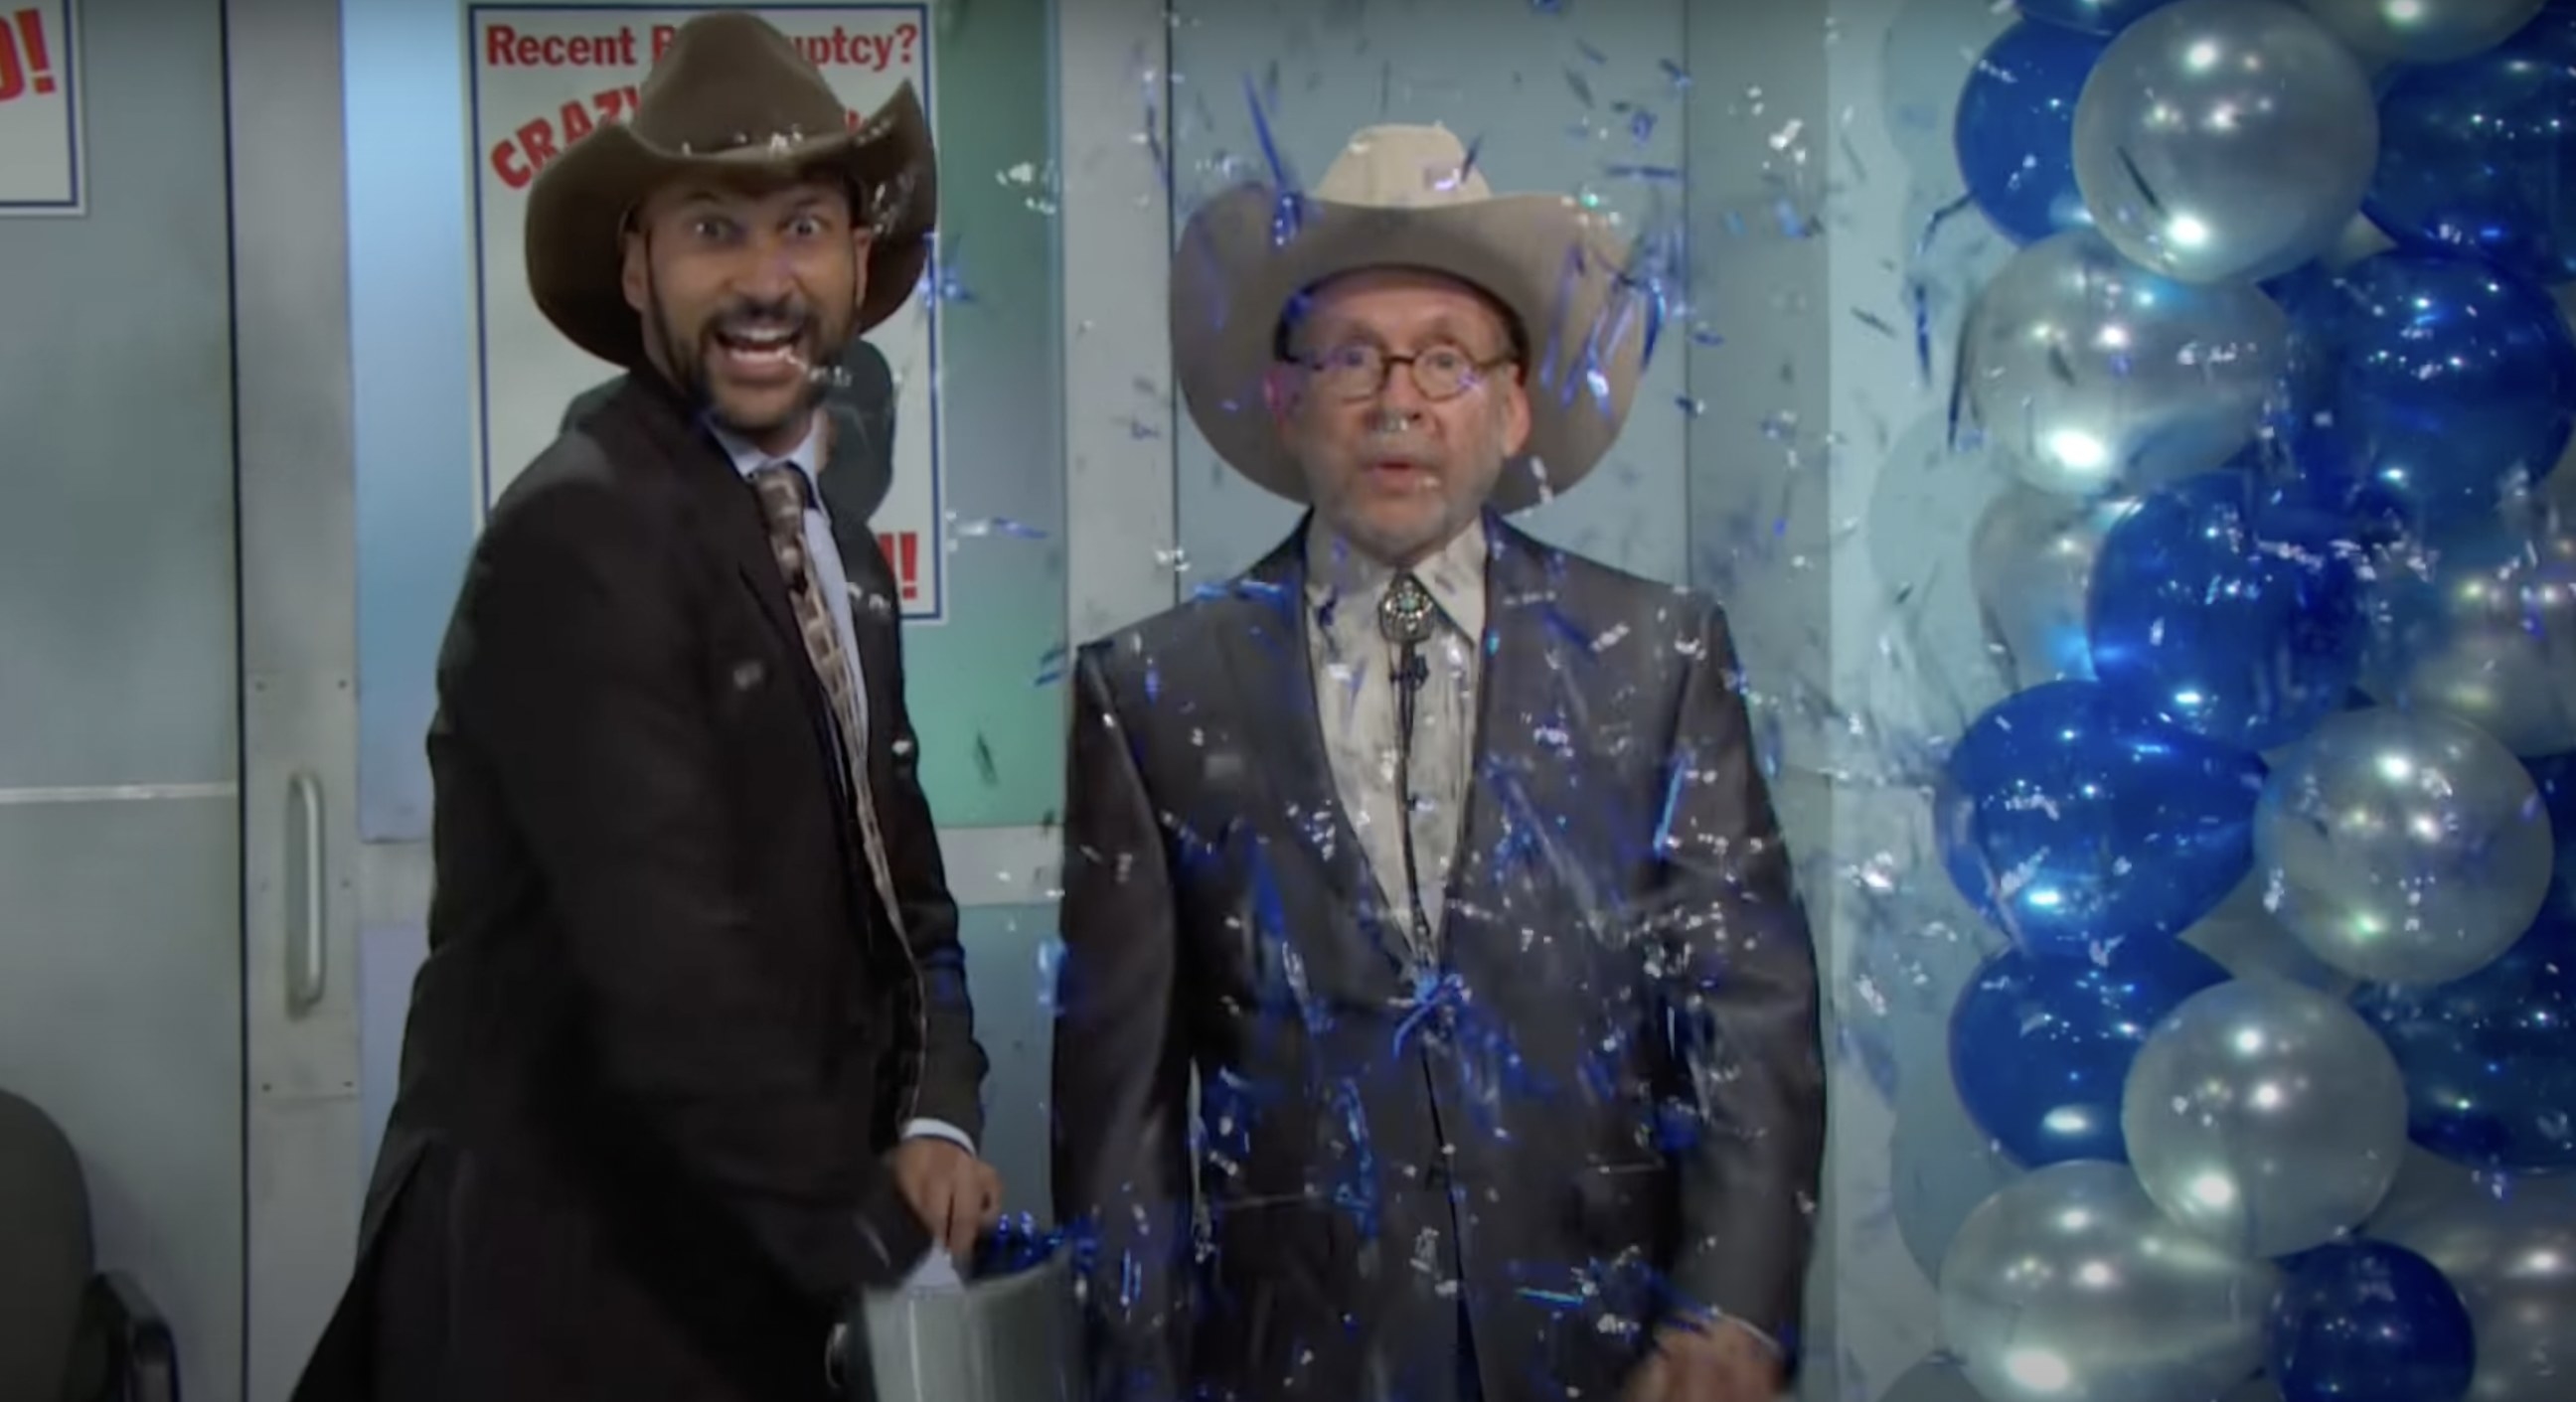 Keegan Michael Key and Bob Balaban in cowboy hats, with Key throwing confetti